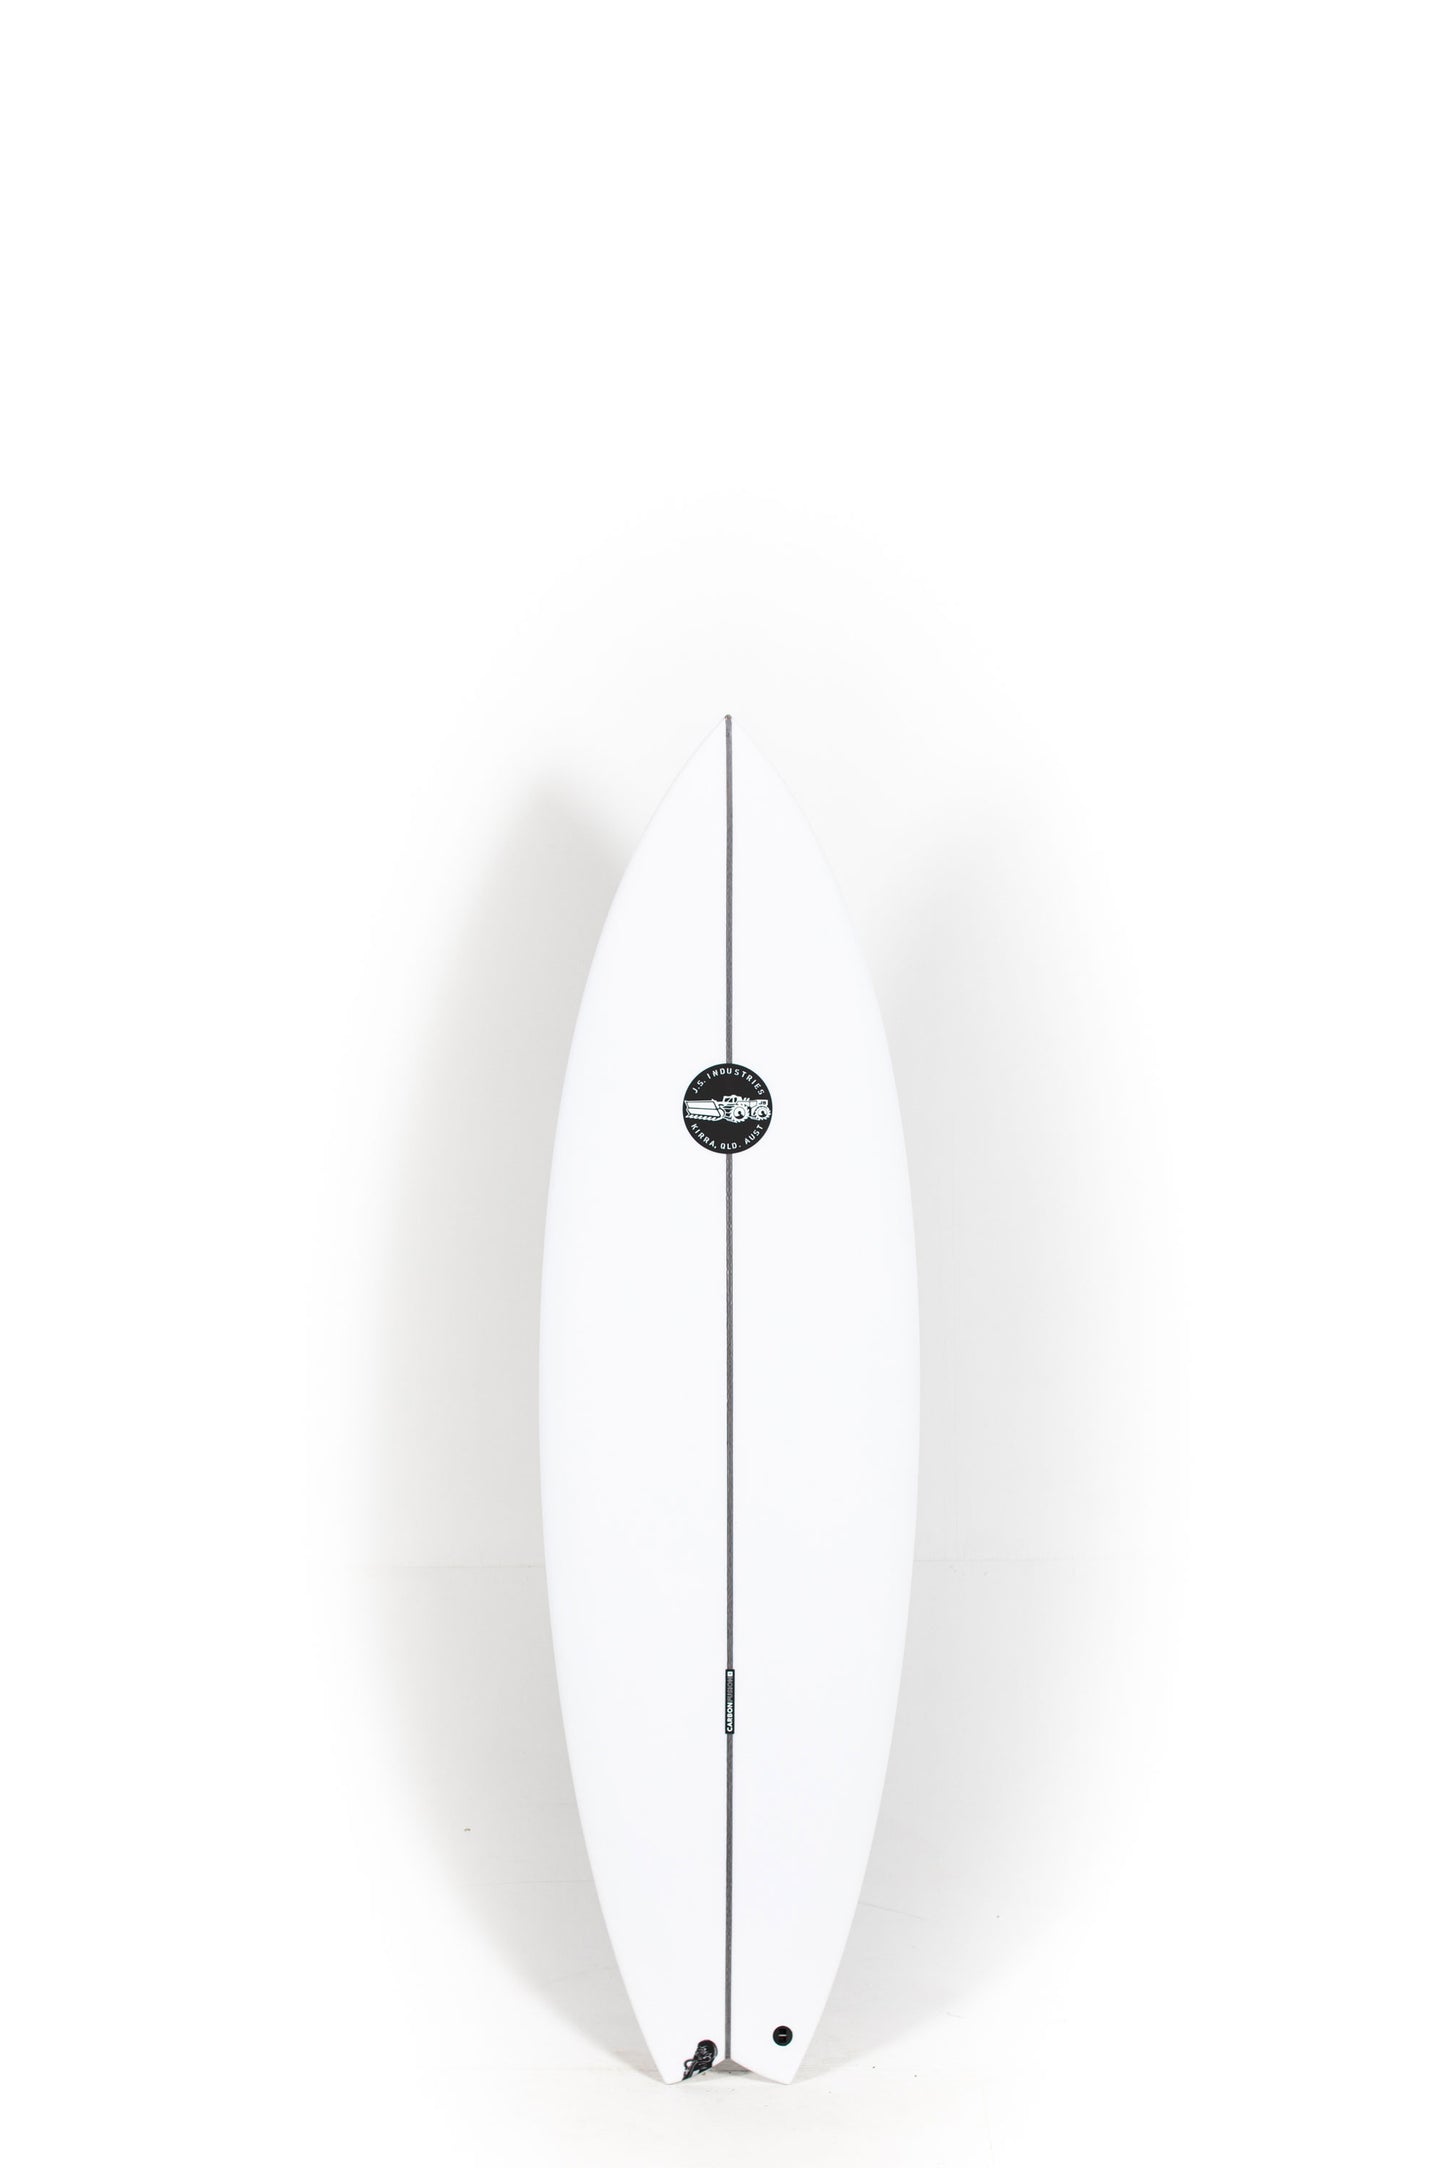 Pukas Surf Shop - JS Surfboards - BLACK BARON 2.1 - 5'9" x 19,5 x 2,69 x 31L - BLACKBARON2.1